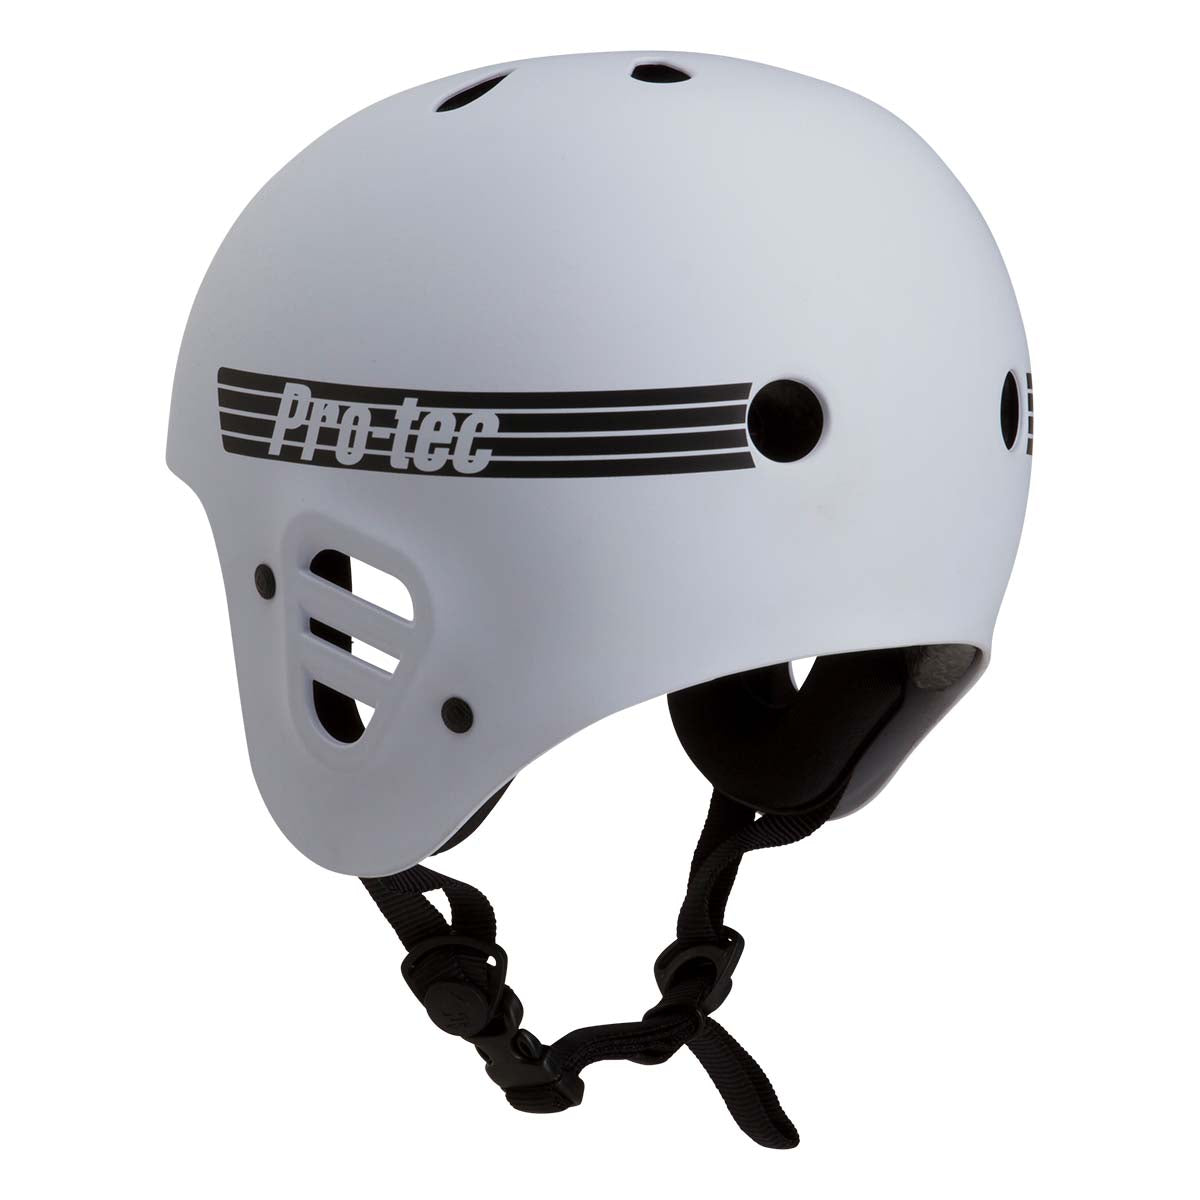 Pro-Tec Full Cut Certified Helmet - Matte White image 2